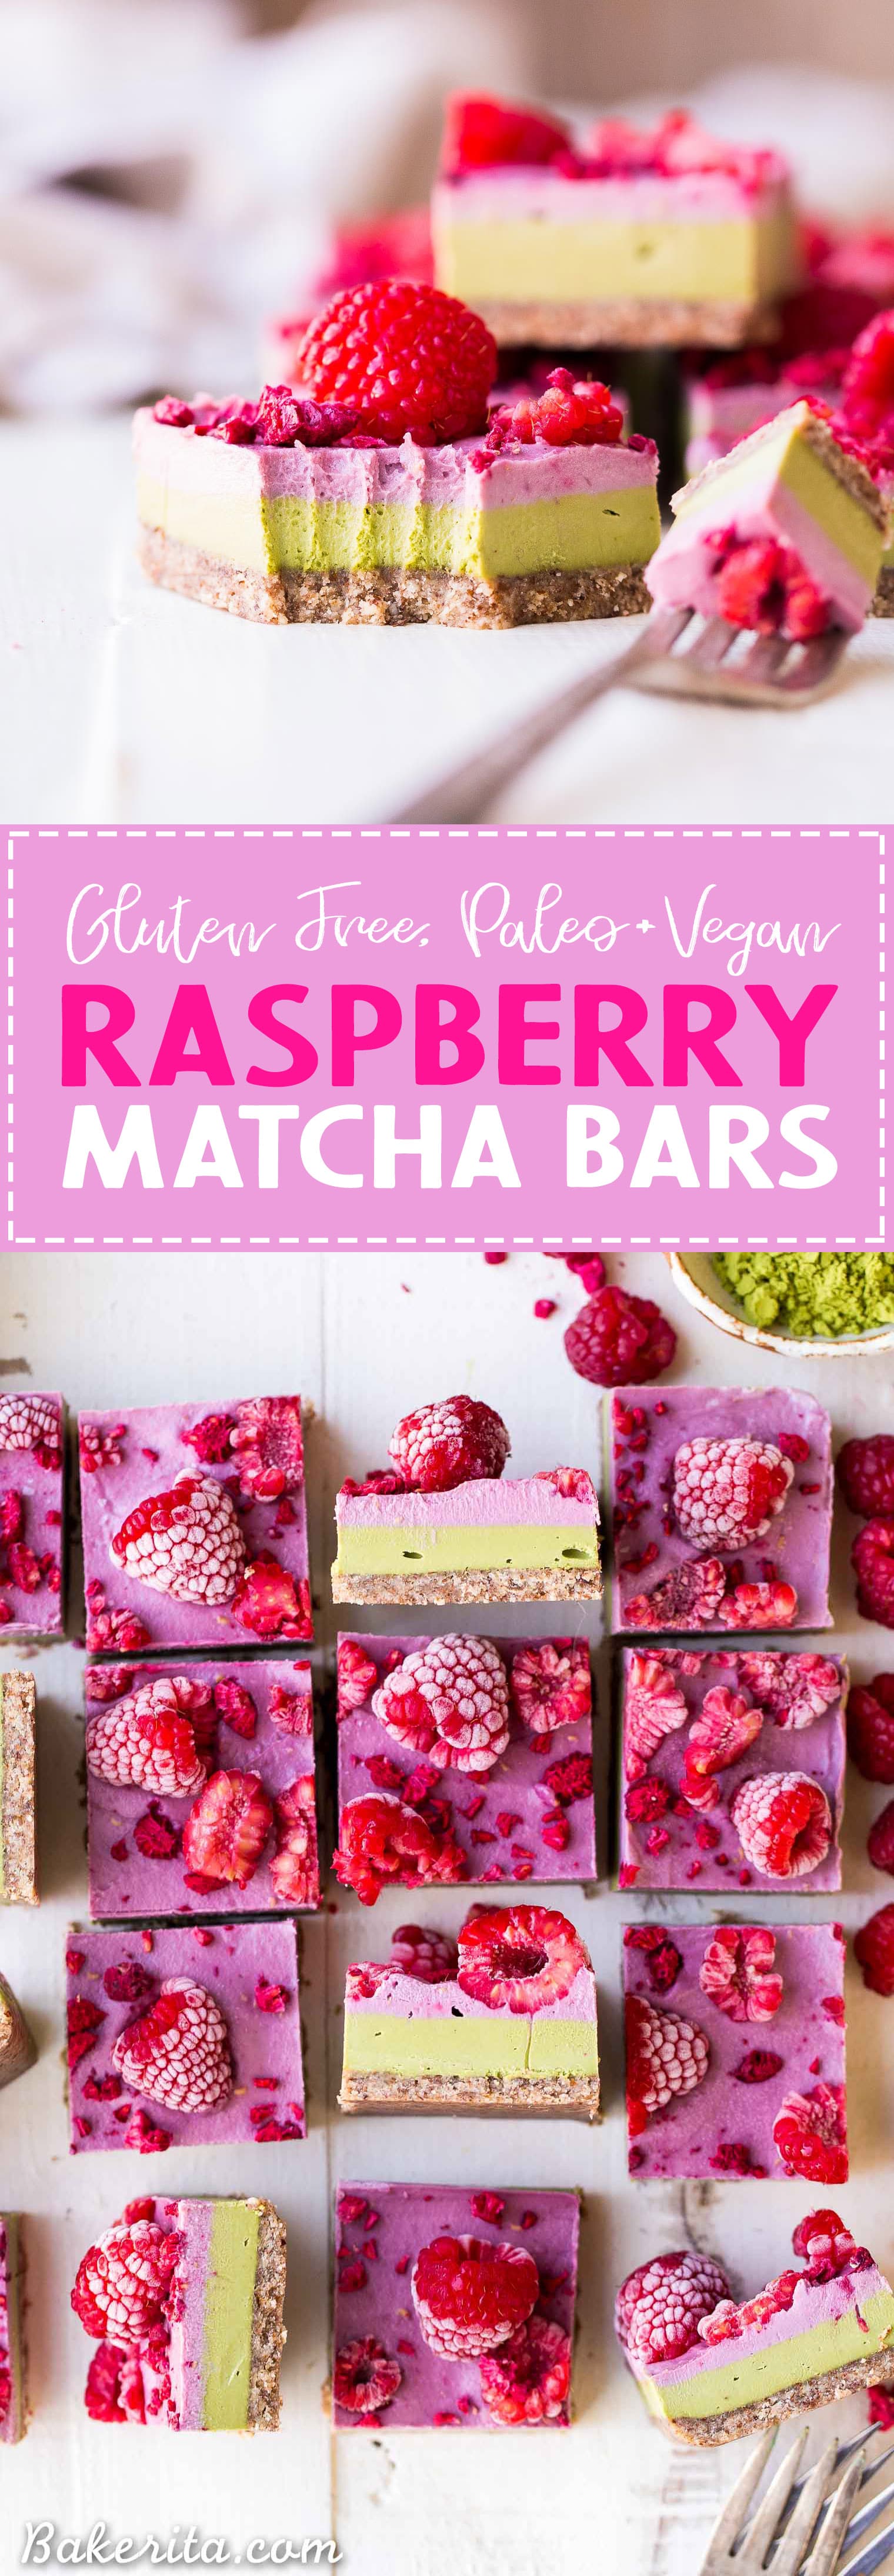 Layered Raspberry Matcha Bars with Text Overlay - Gluten Free, Paleo, Refined Sugar Free, Dairy Free & Vegan Dessert